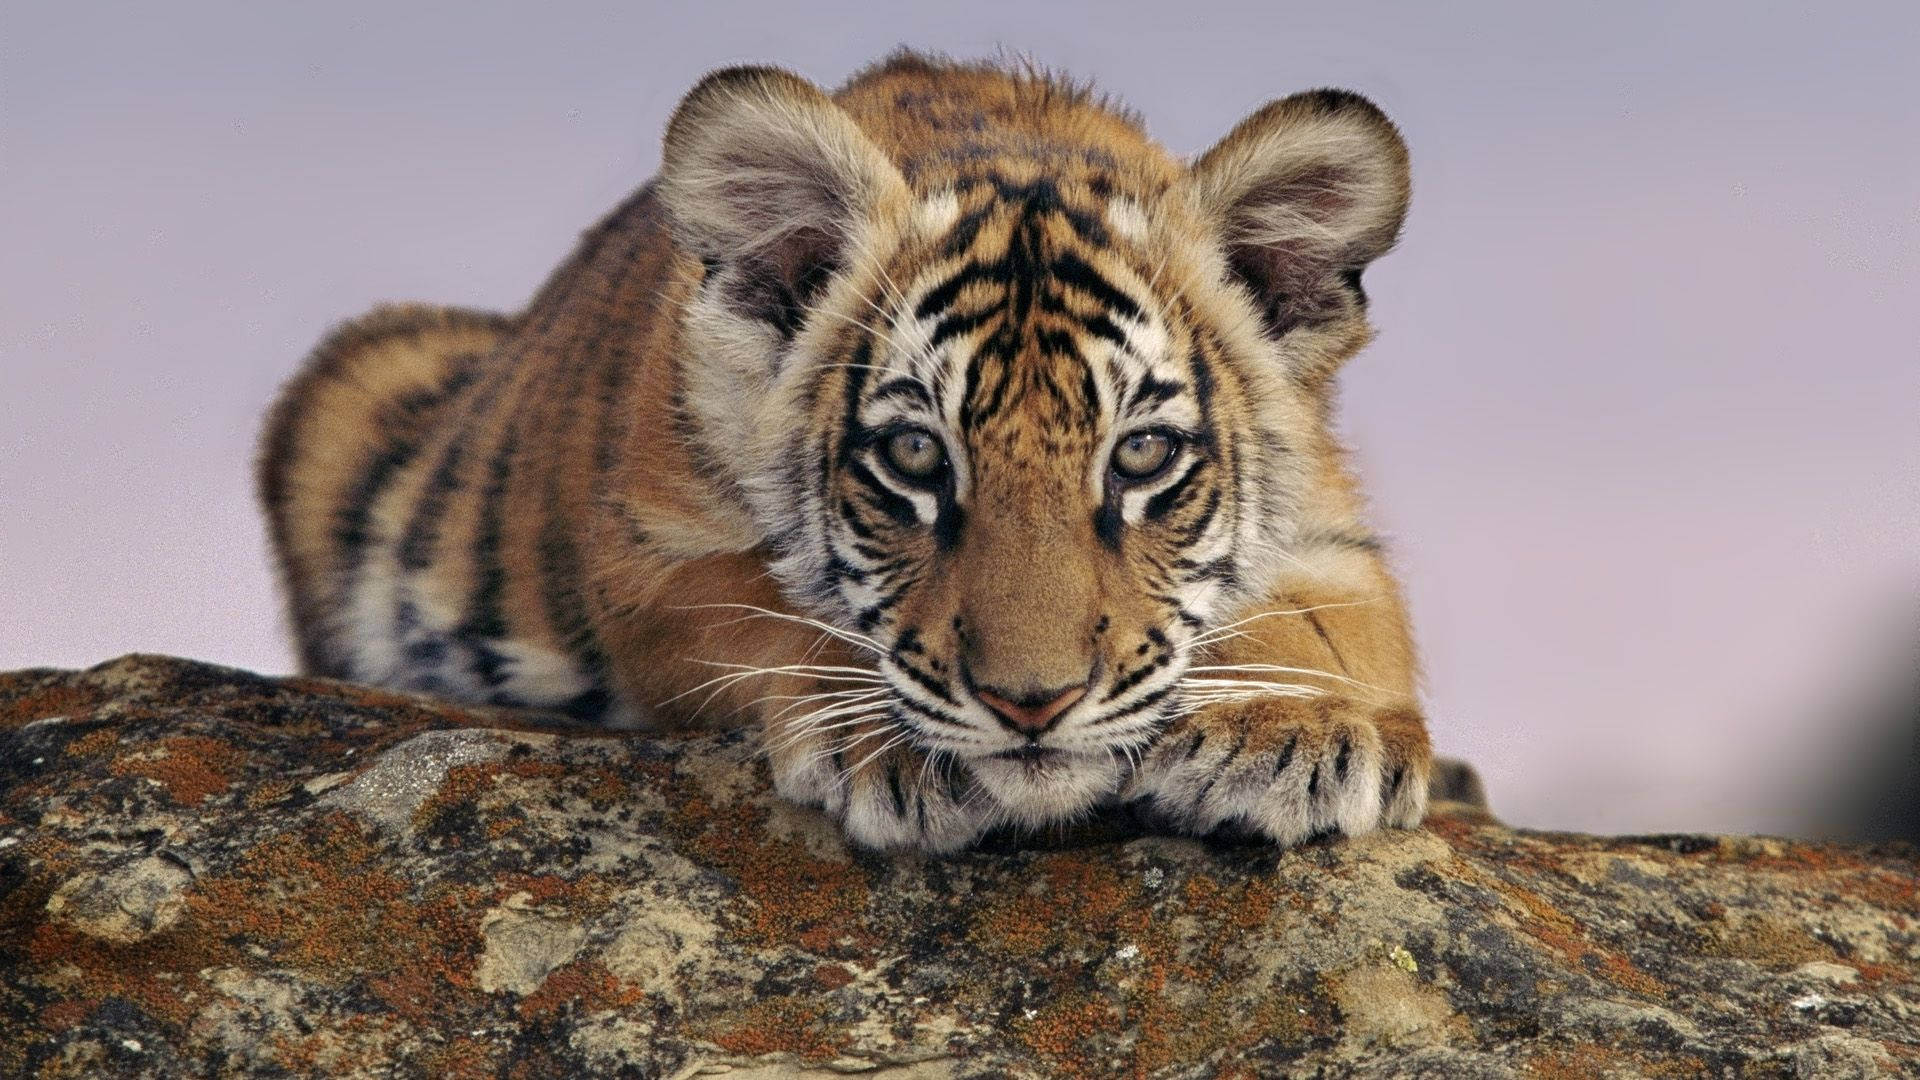 Baby Tiger With Intense Gaze Wallpaper